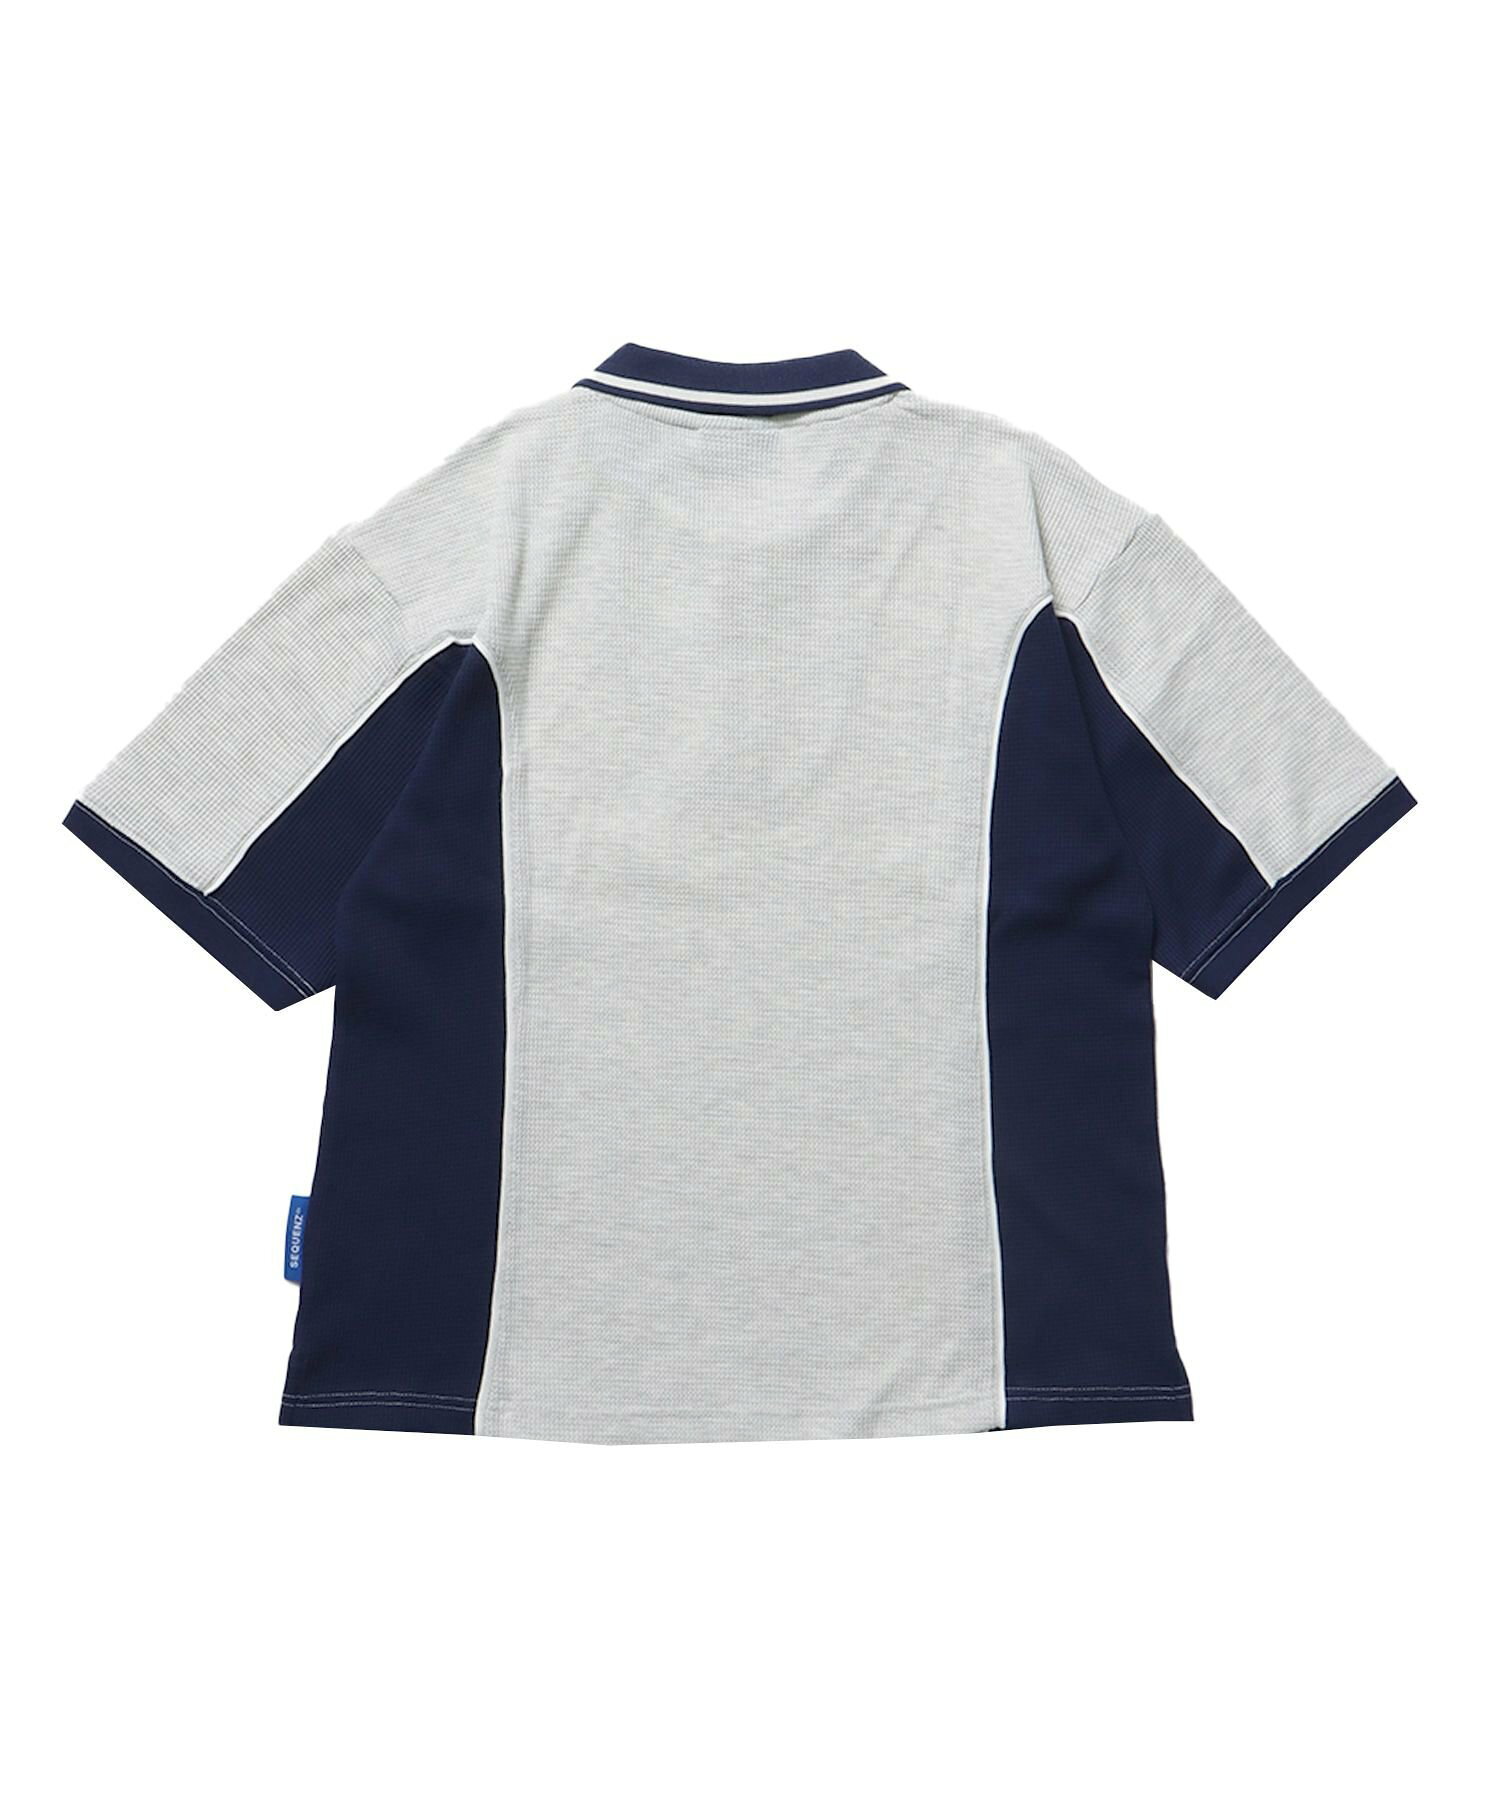 【SEQUENZ】SQNZ SPORT ZIP POLO S/S THERMAL / 衿付き ポロシャツ 配色 パイピング ブランドロゴ ワンポイント